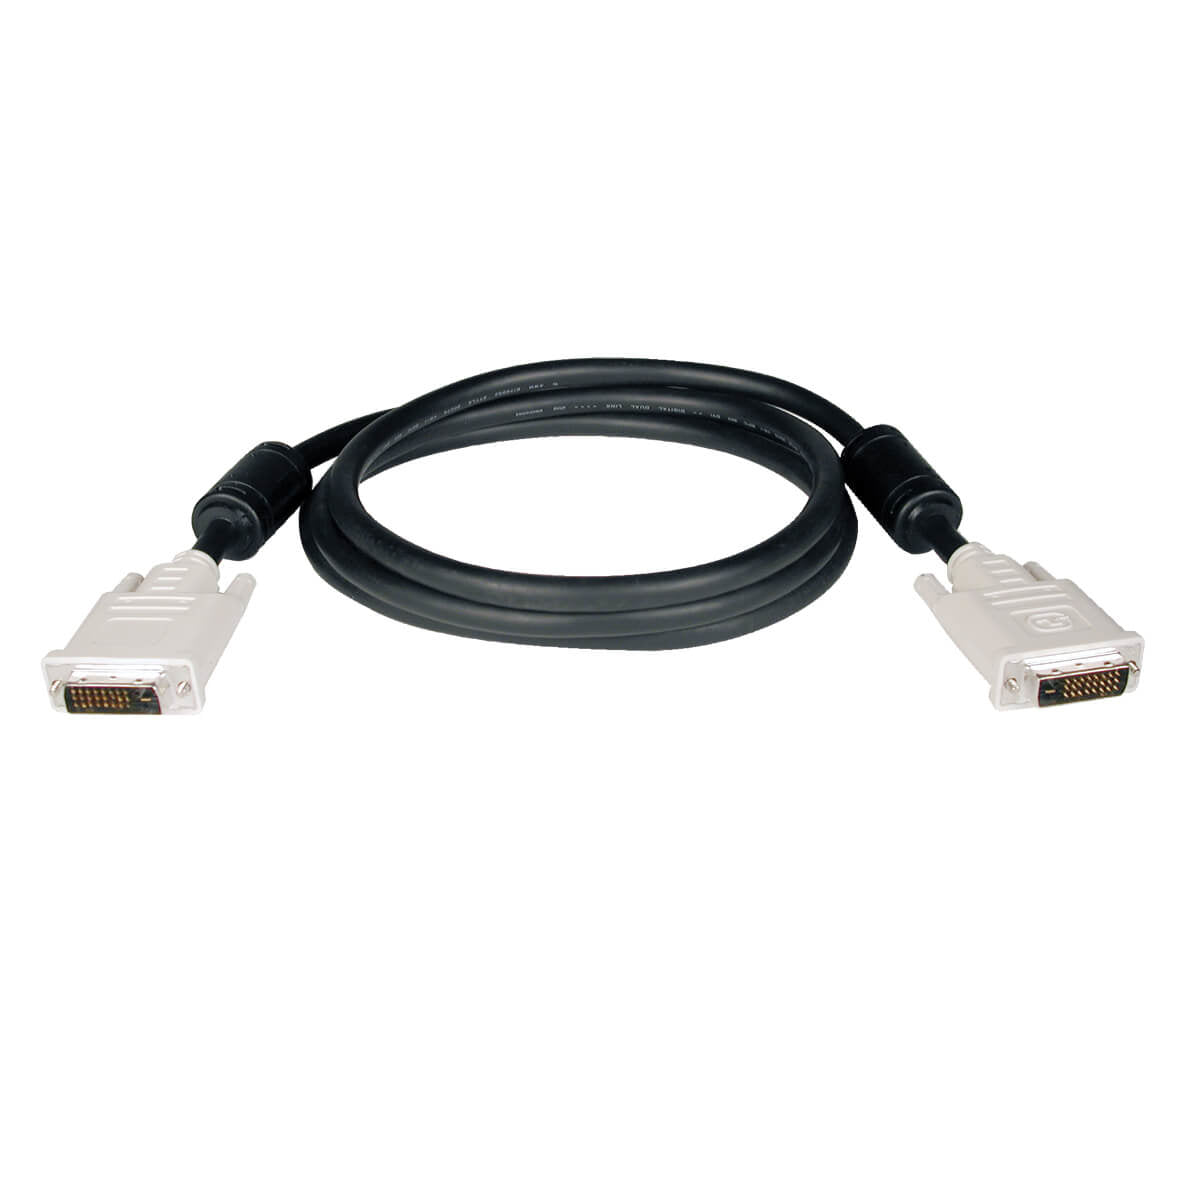 Cable DVI de Doble Enlace para Monitor Tripp Lite P560-006, DVI-D Macho - DVI-D Macho, 1.83 Metros, Negro